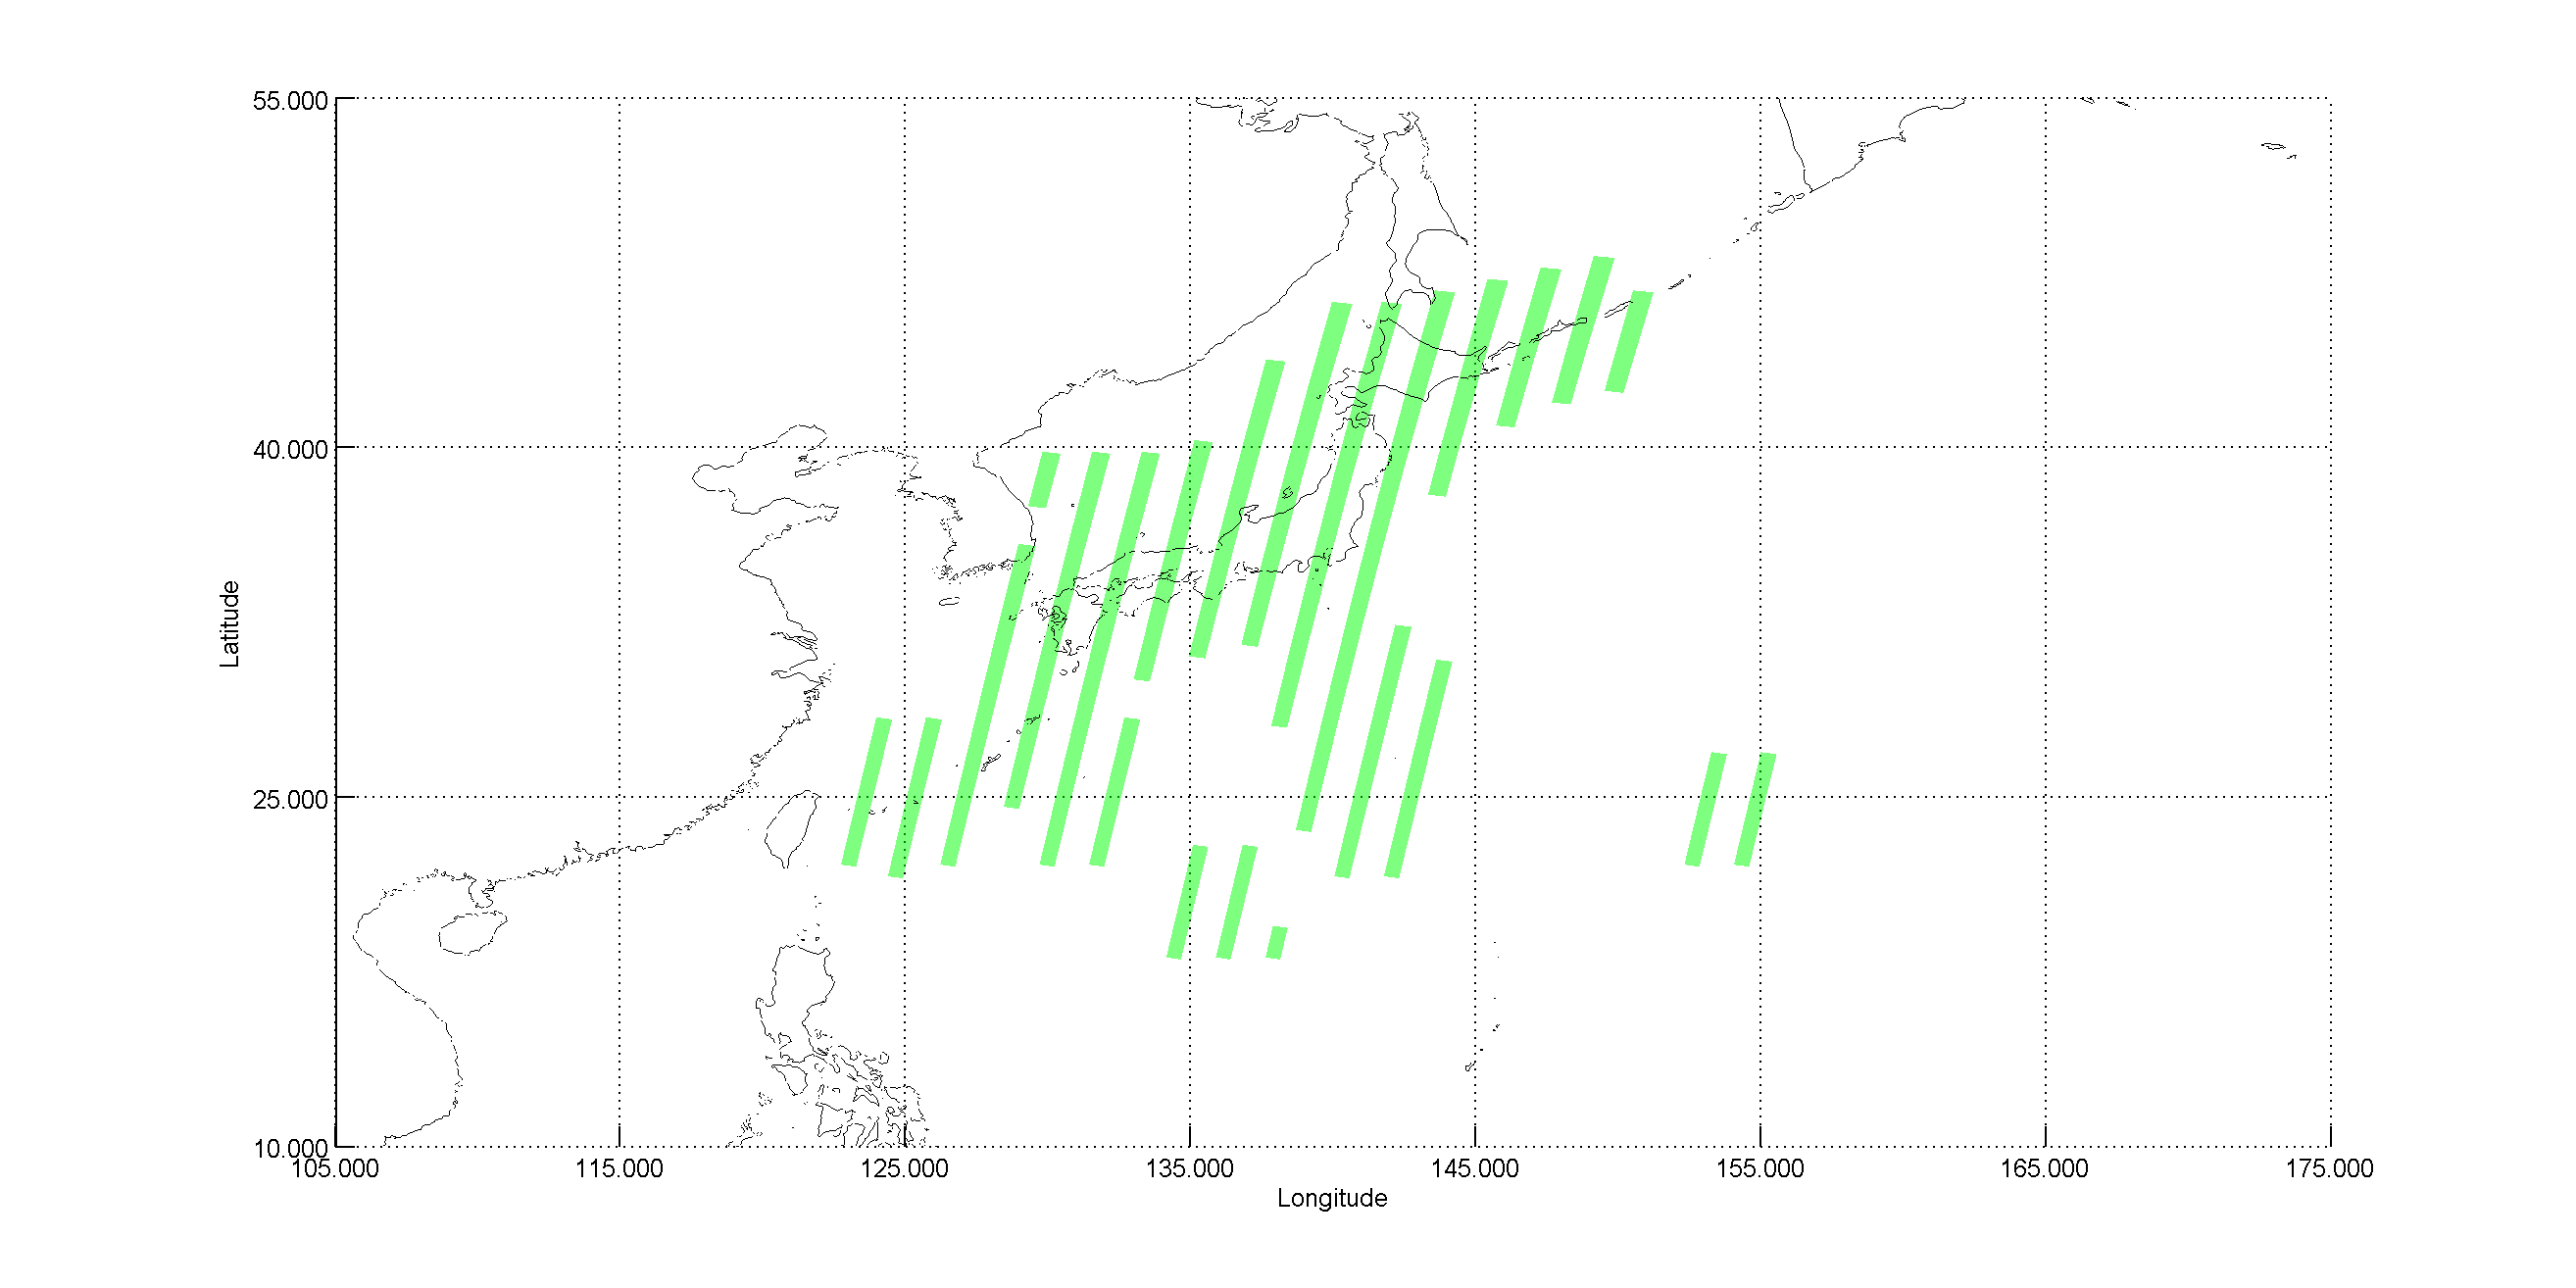 CYCLE_134 - Japan Descending passes